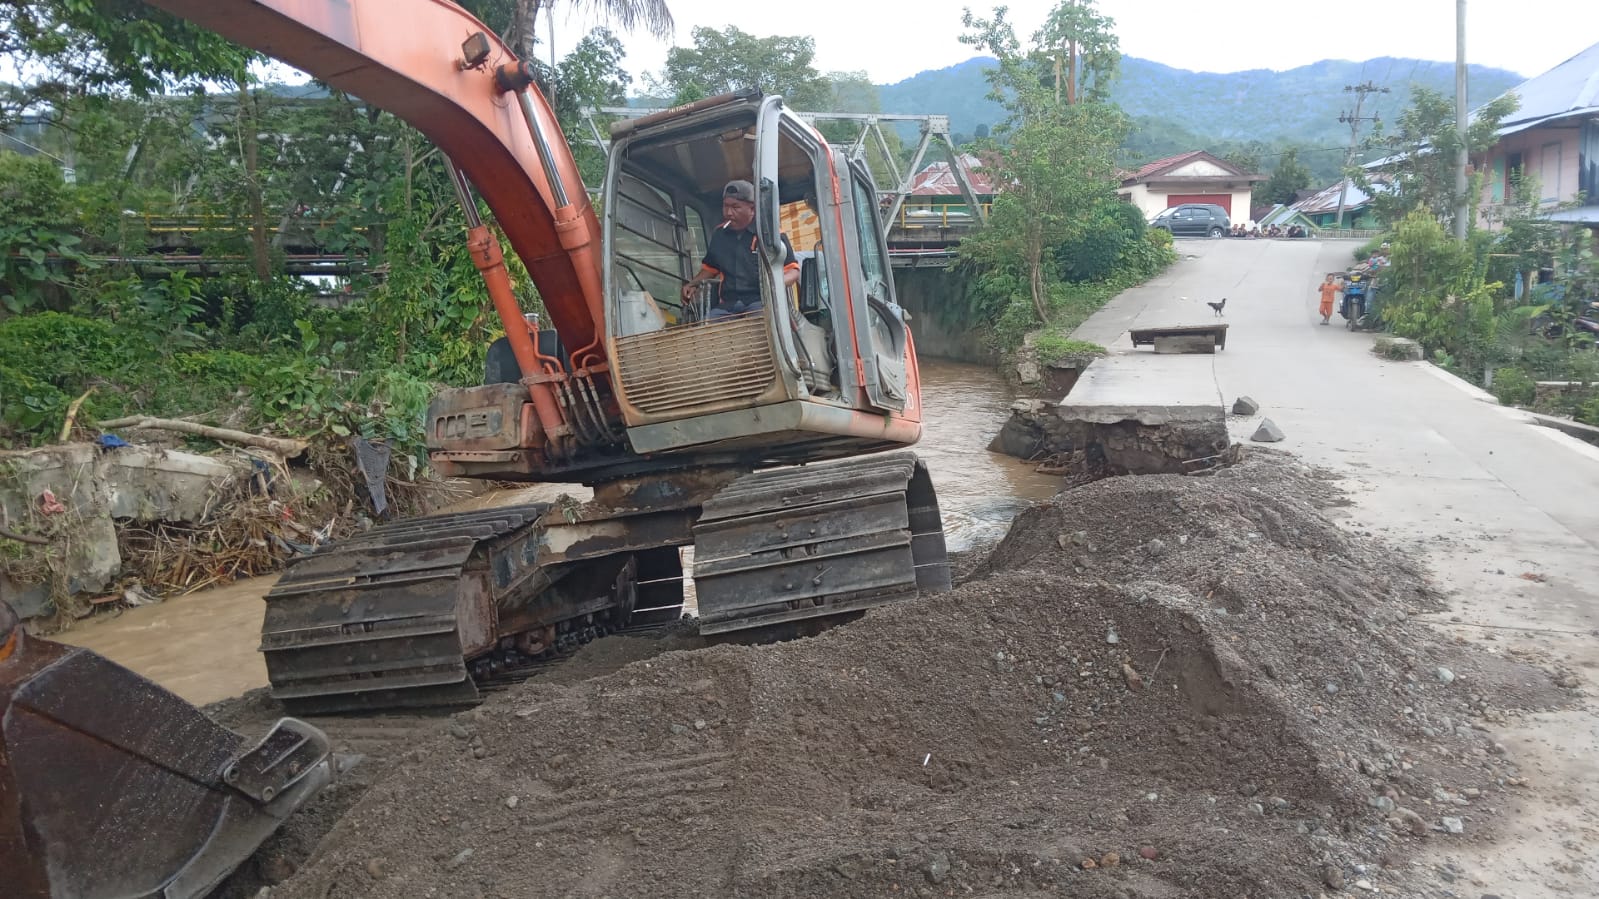 Kerusakan Infrastruktur Jalan Akibat Banjir di Buaynyerupa Selesai Diperbaiki 